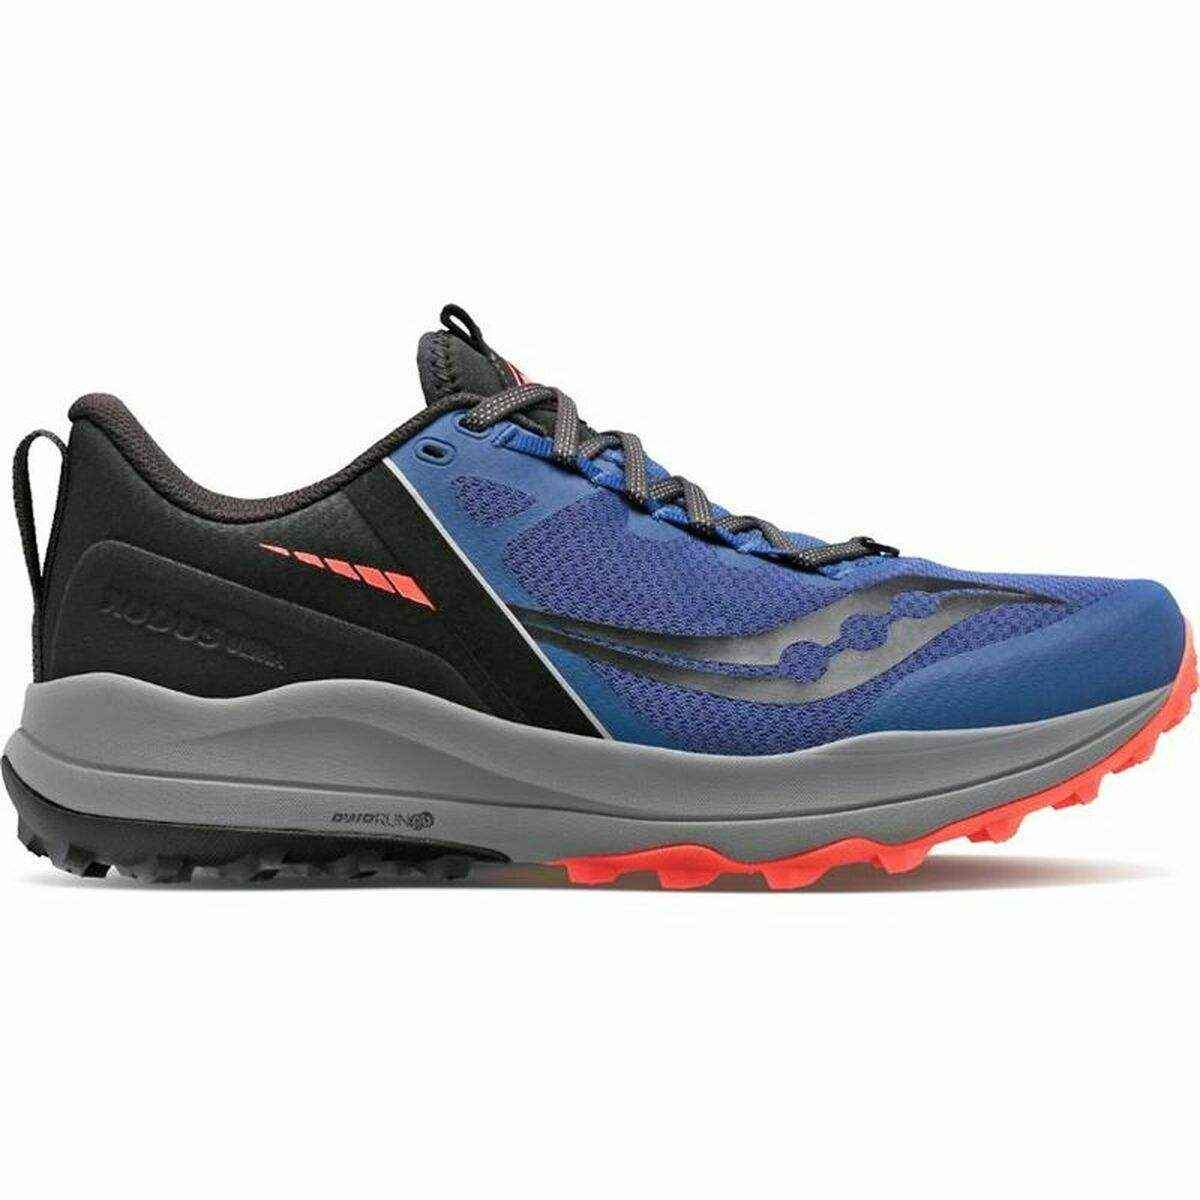 Chaussures de Running pour Adultes Saucony Xodus Ultra 41487 Bleu - Saucony - Jardin D'Eyden - jardindeyden.fr